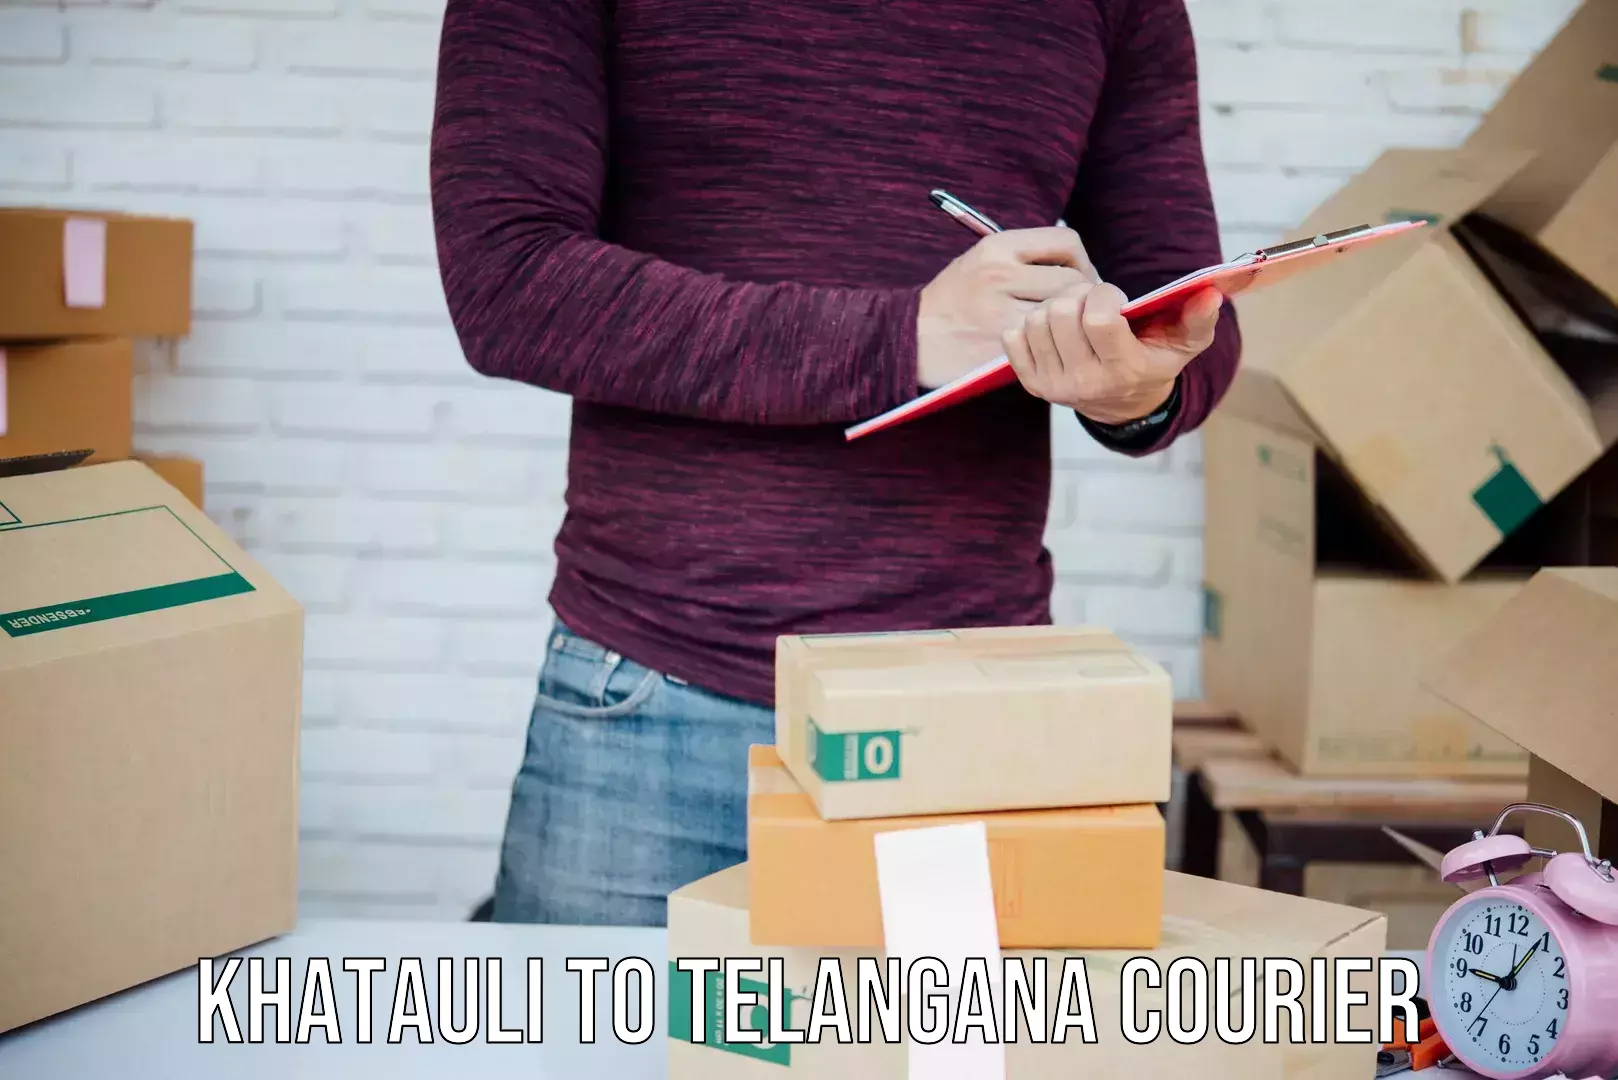 Cash on delivery service Khatauli to Telangana